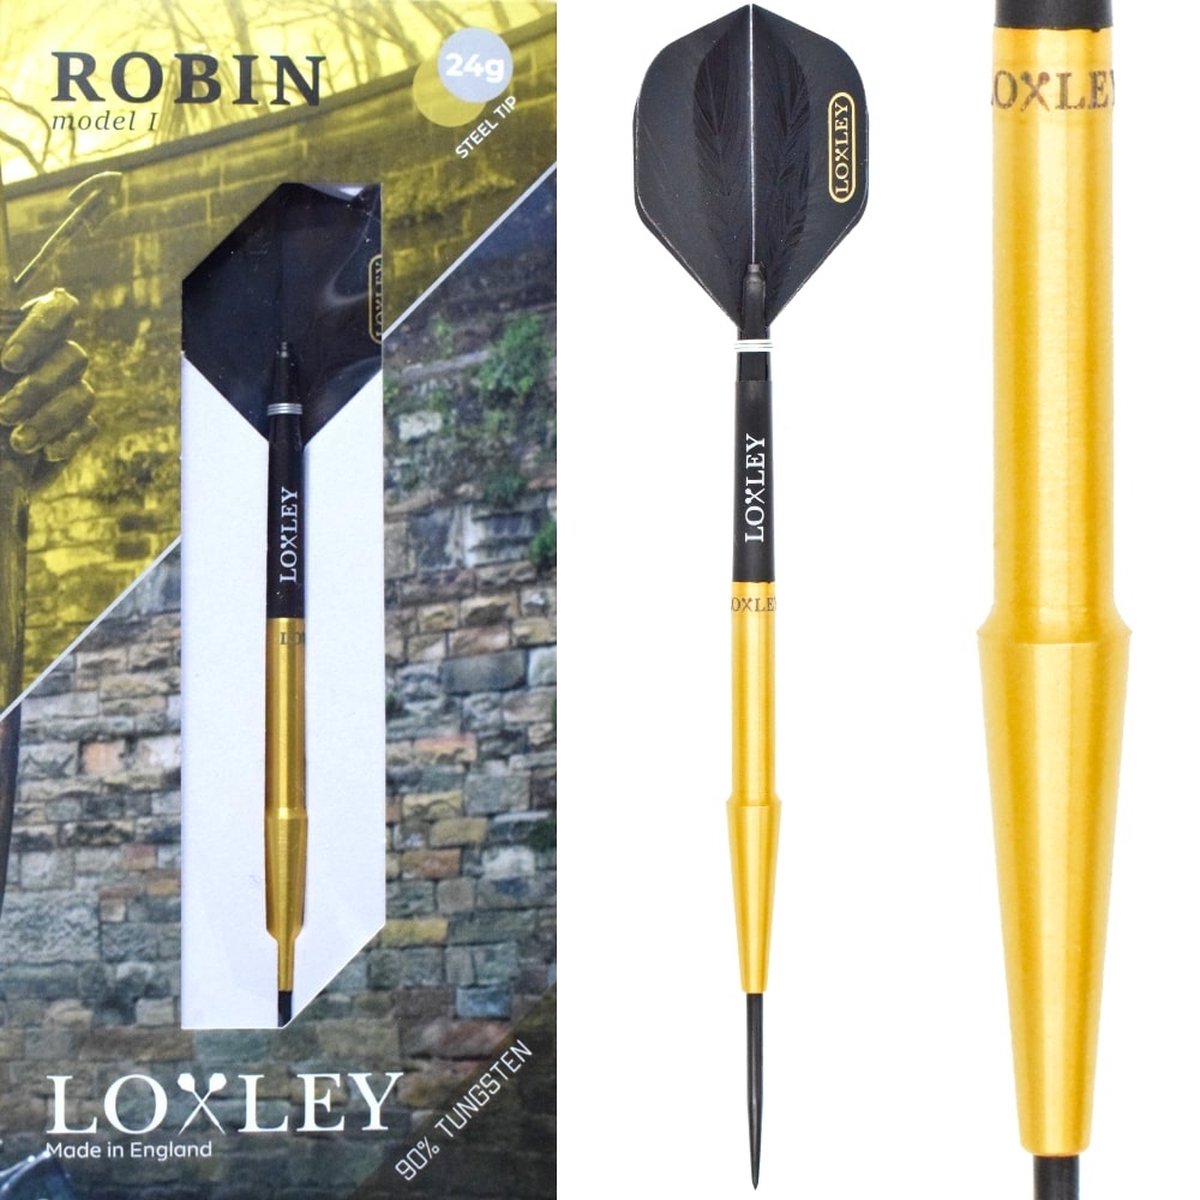 Loxley Robin 90% Model 1 Gold Edition - Dartpijlen - 24 Gram